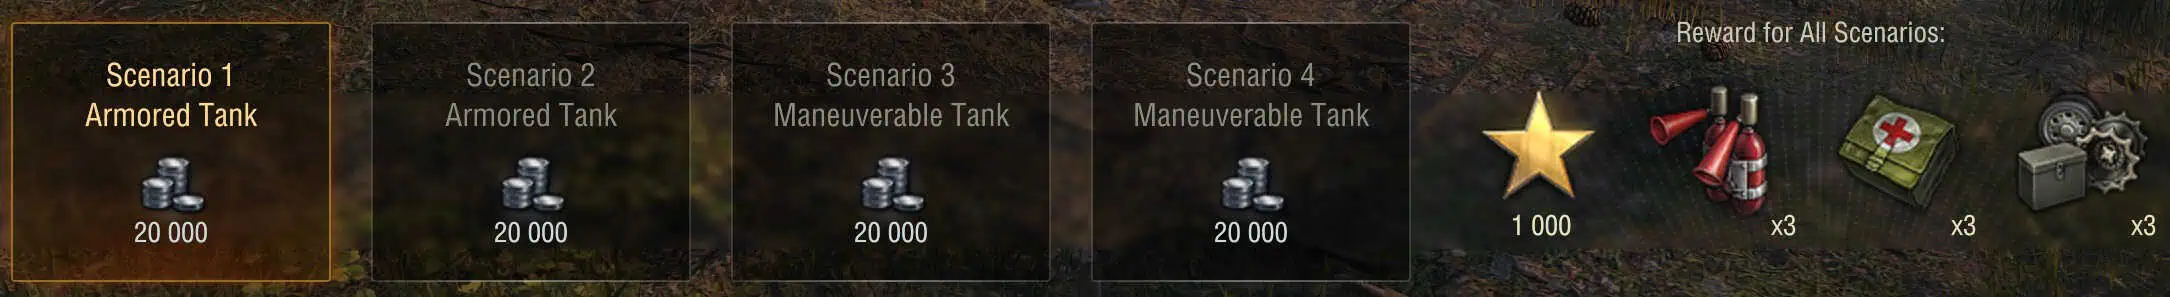 Topography Rewards World of Tanks